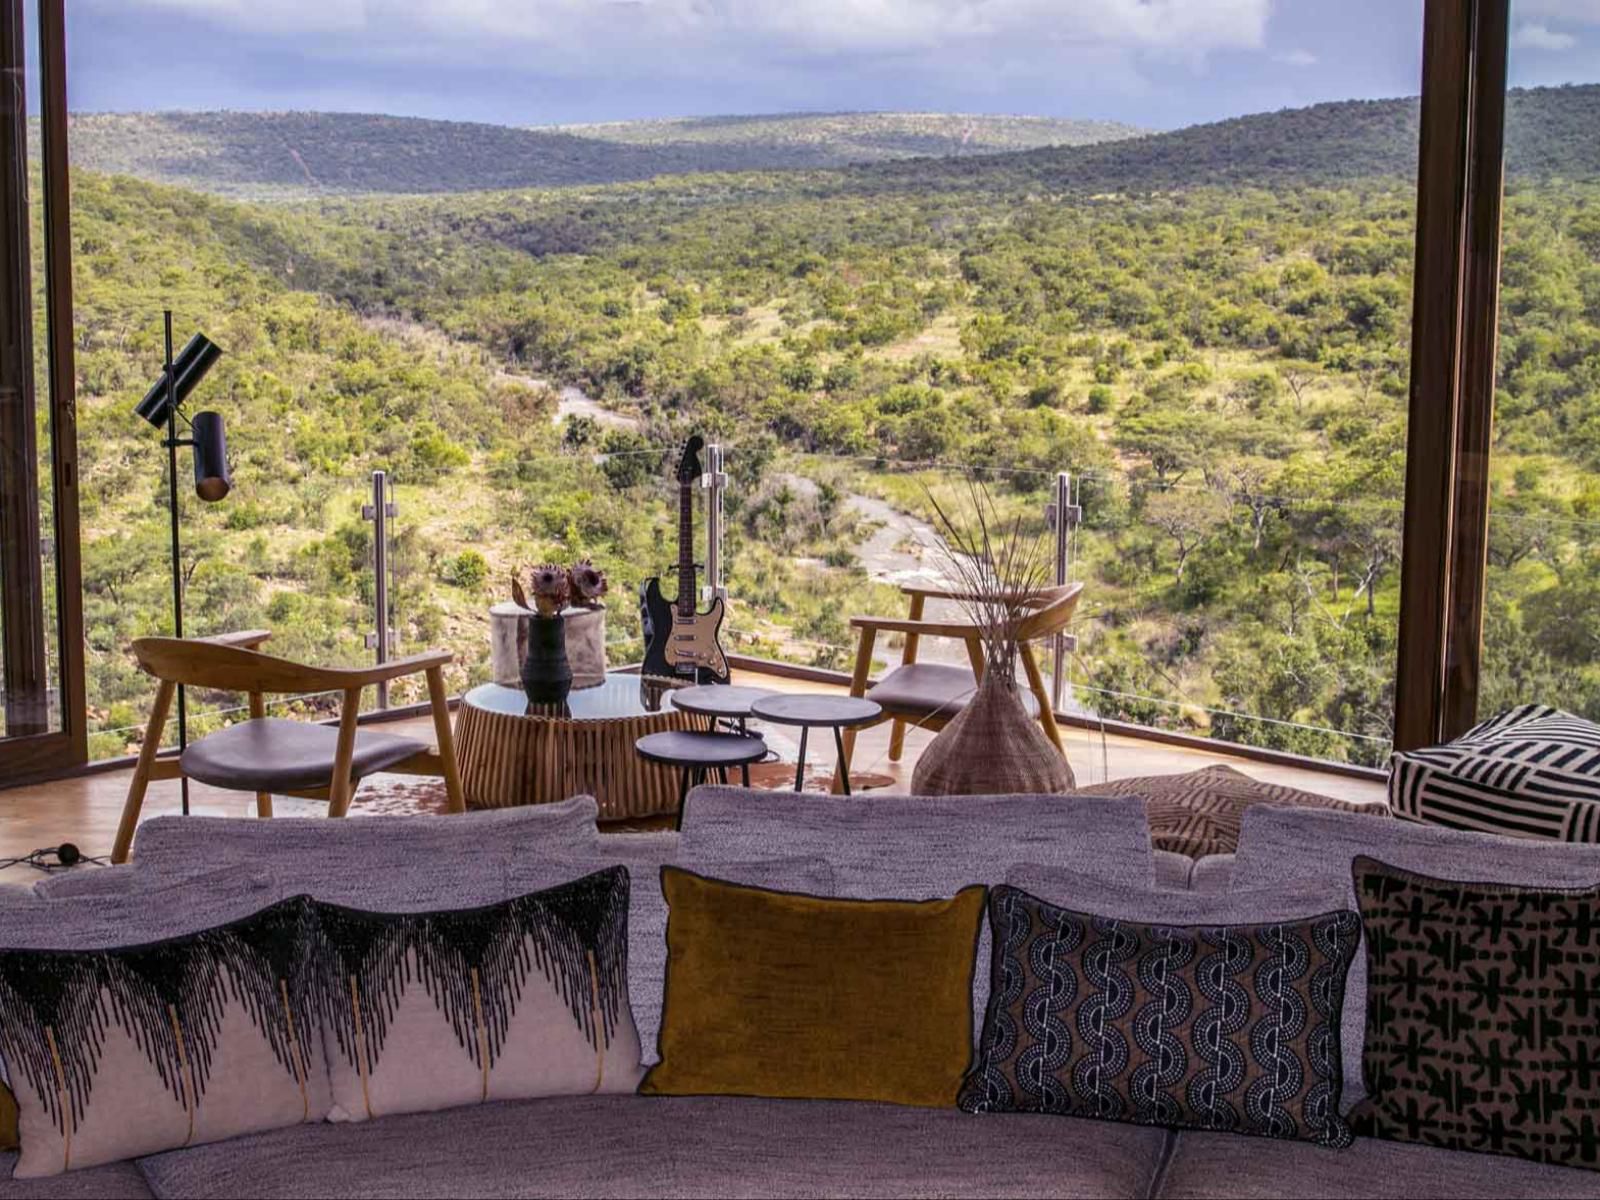 Matomo Exclusive Luxury Safari Lodge Welgevonden Game Reserve Limpopo Province South Africa Bar